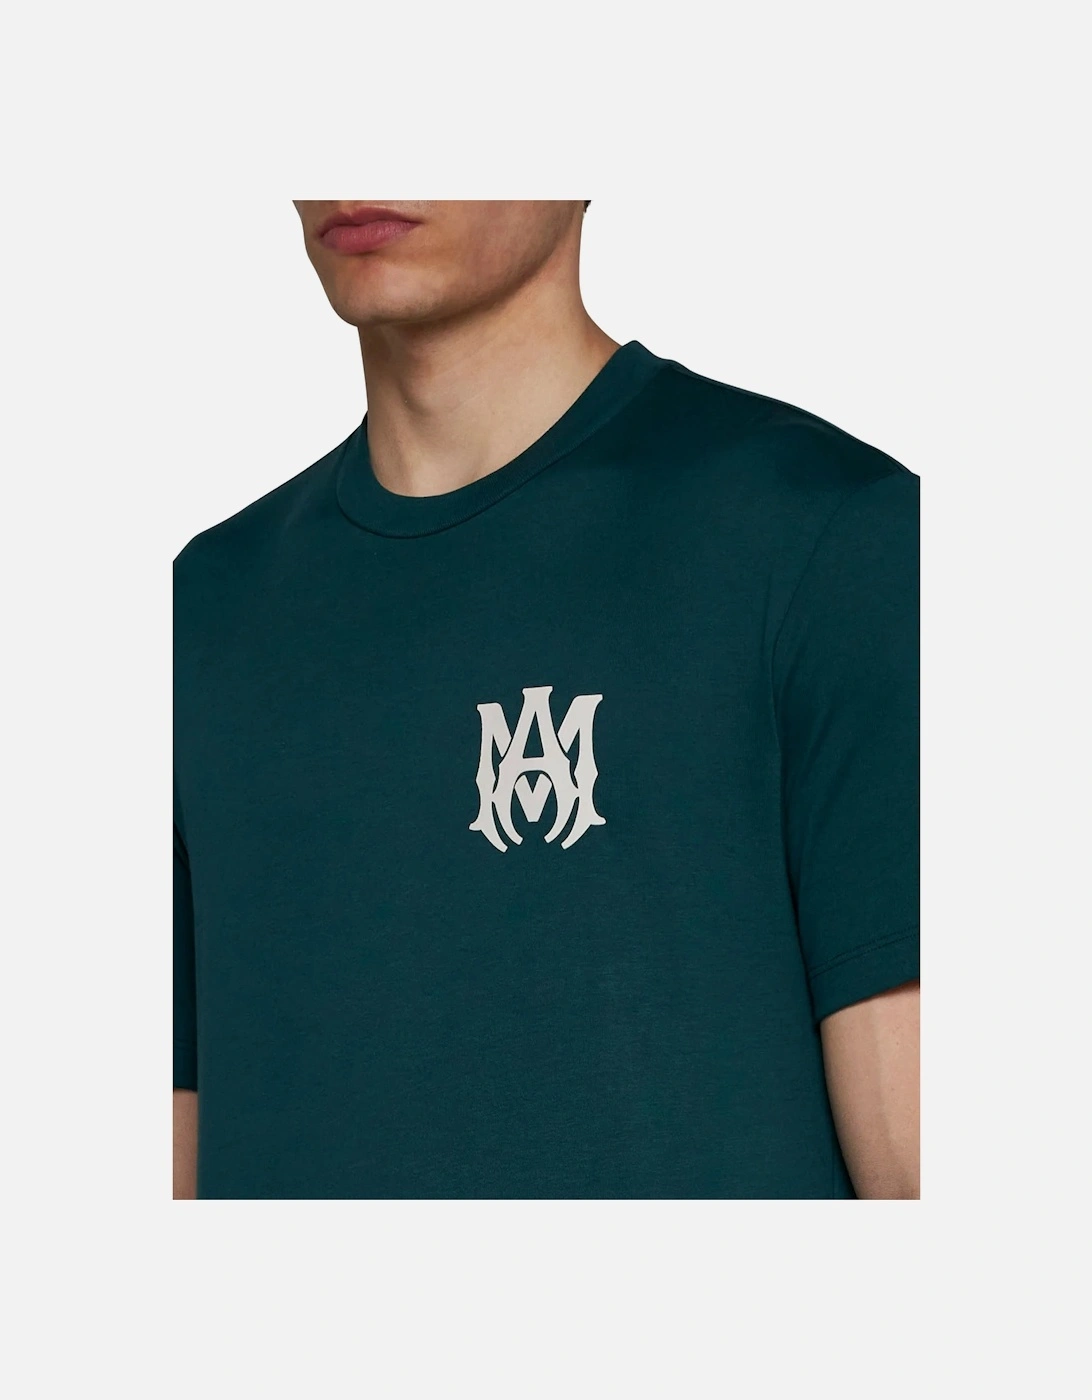 MA Core Logo Printed T-Shirt in Rain Forest Green